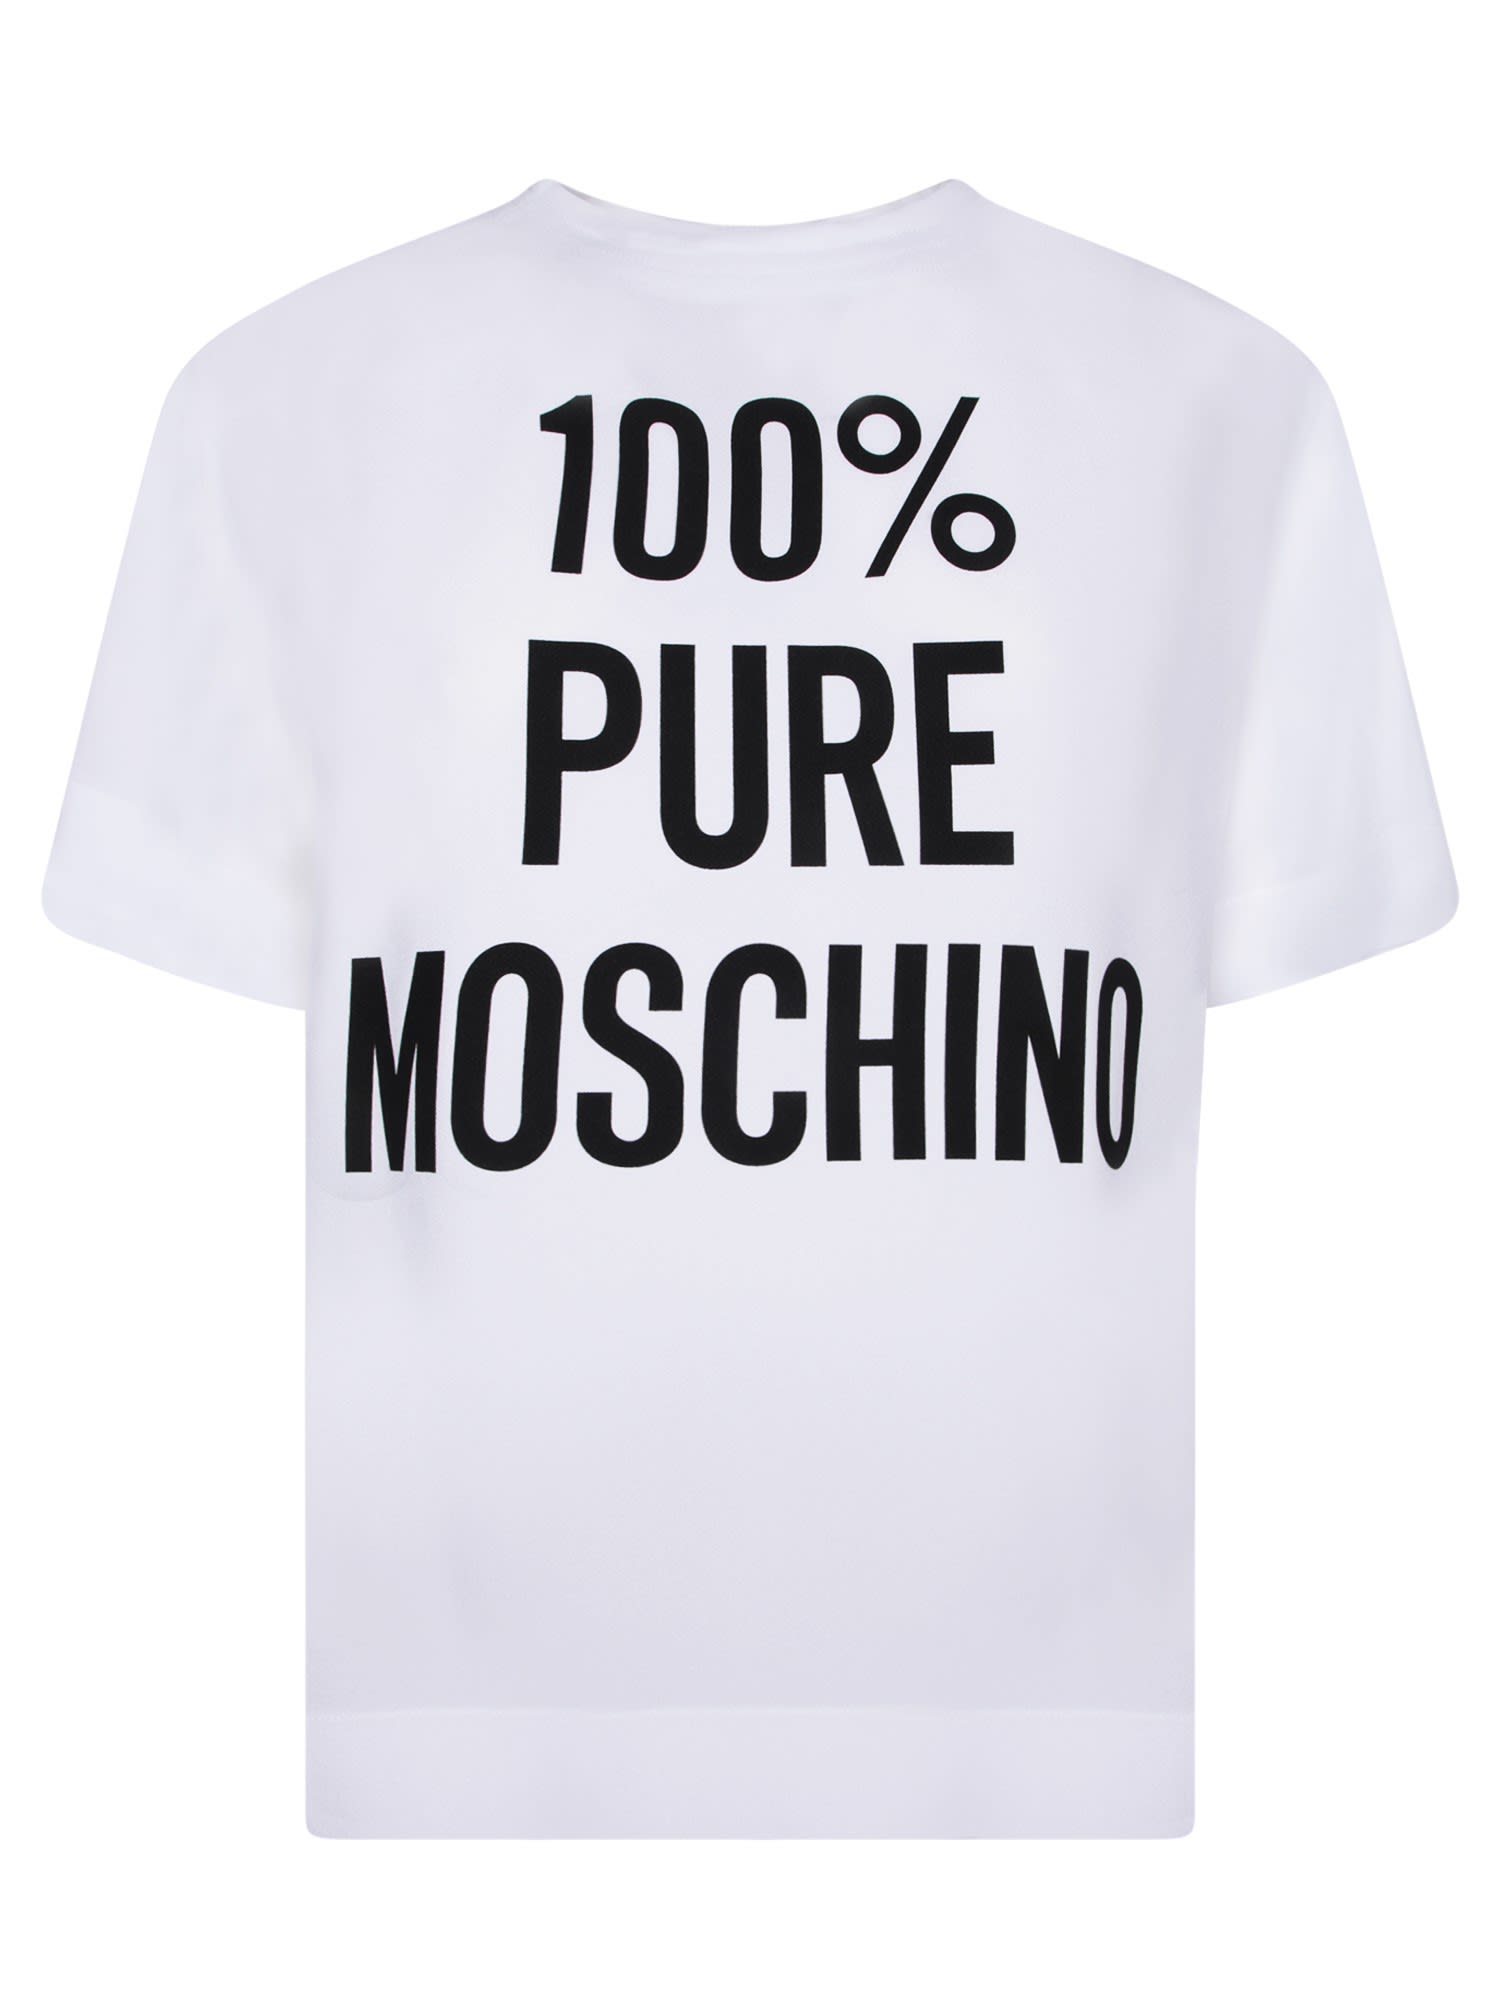 Moschino Satin Enverse T-shirt Black And White